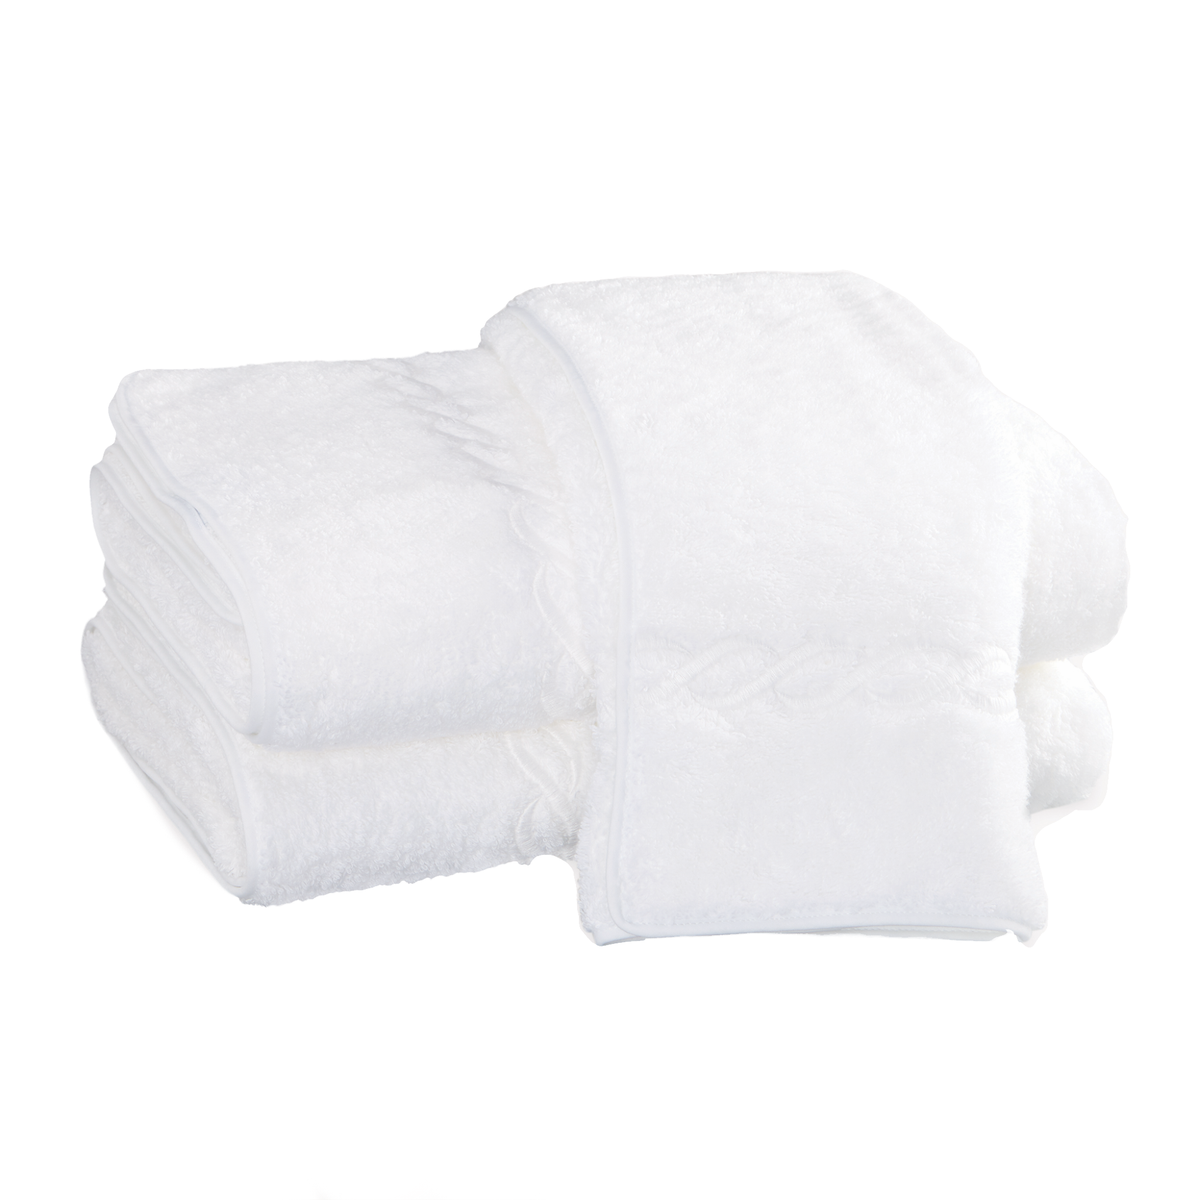 Folded Matouk Classic Chain Bath Towels in Color White